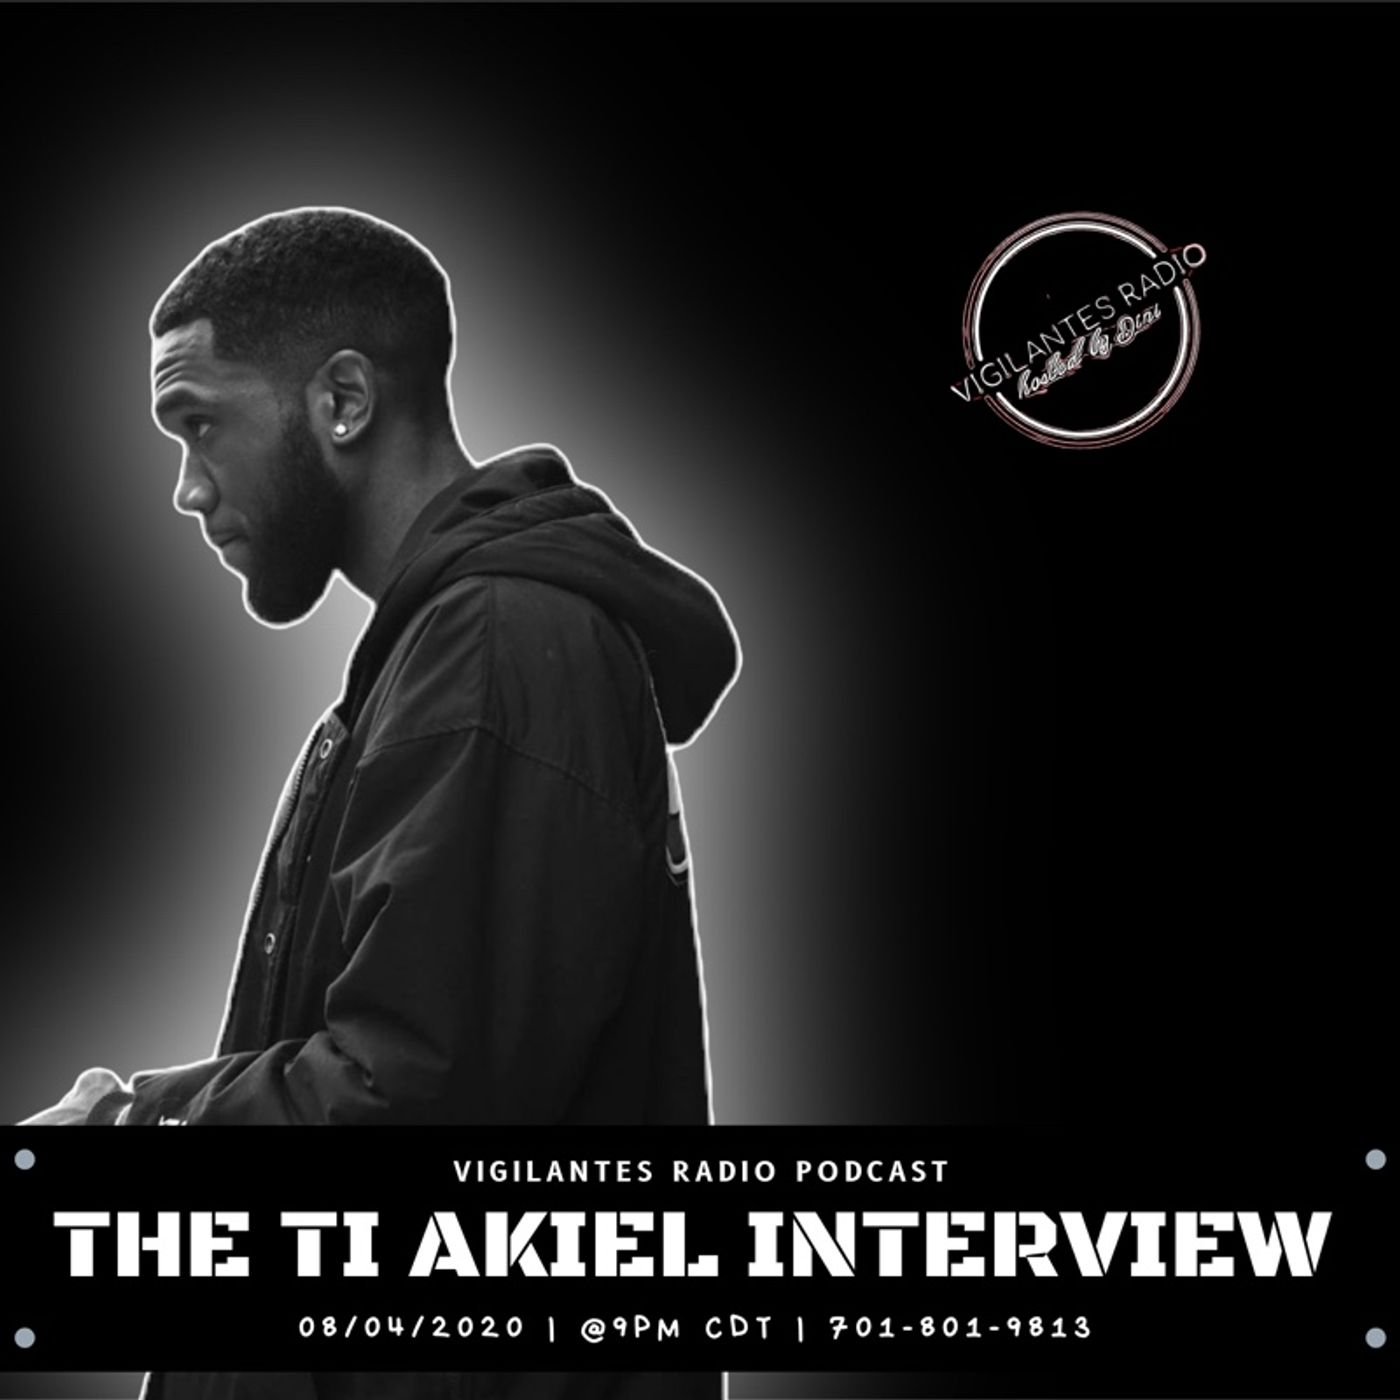 The Ti Akiel Interview. Image